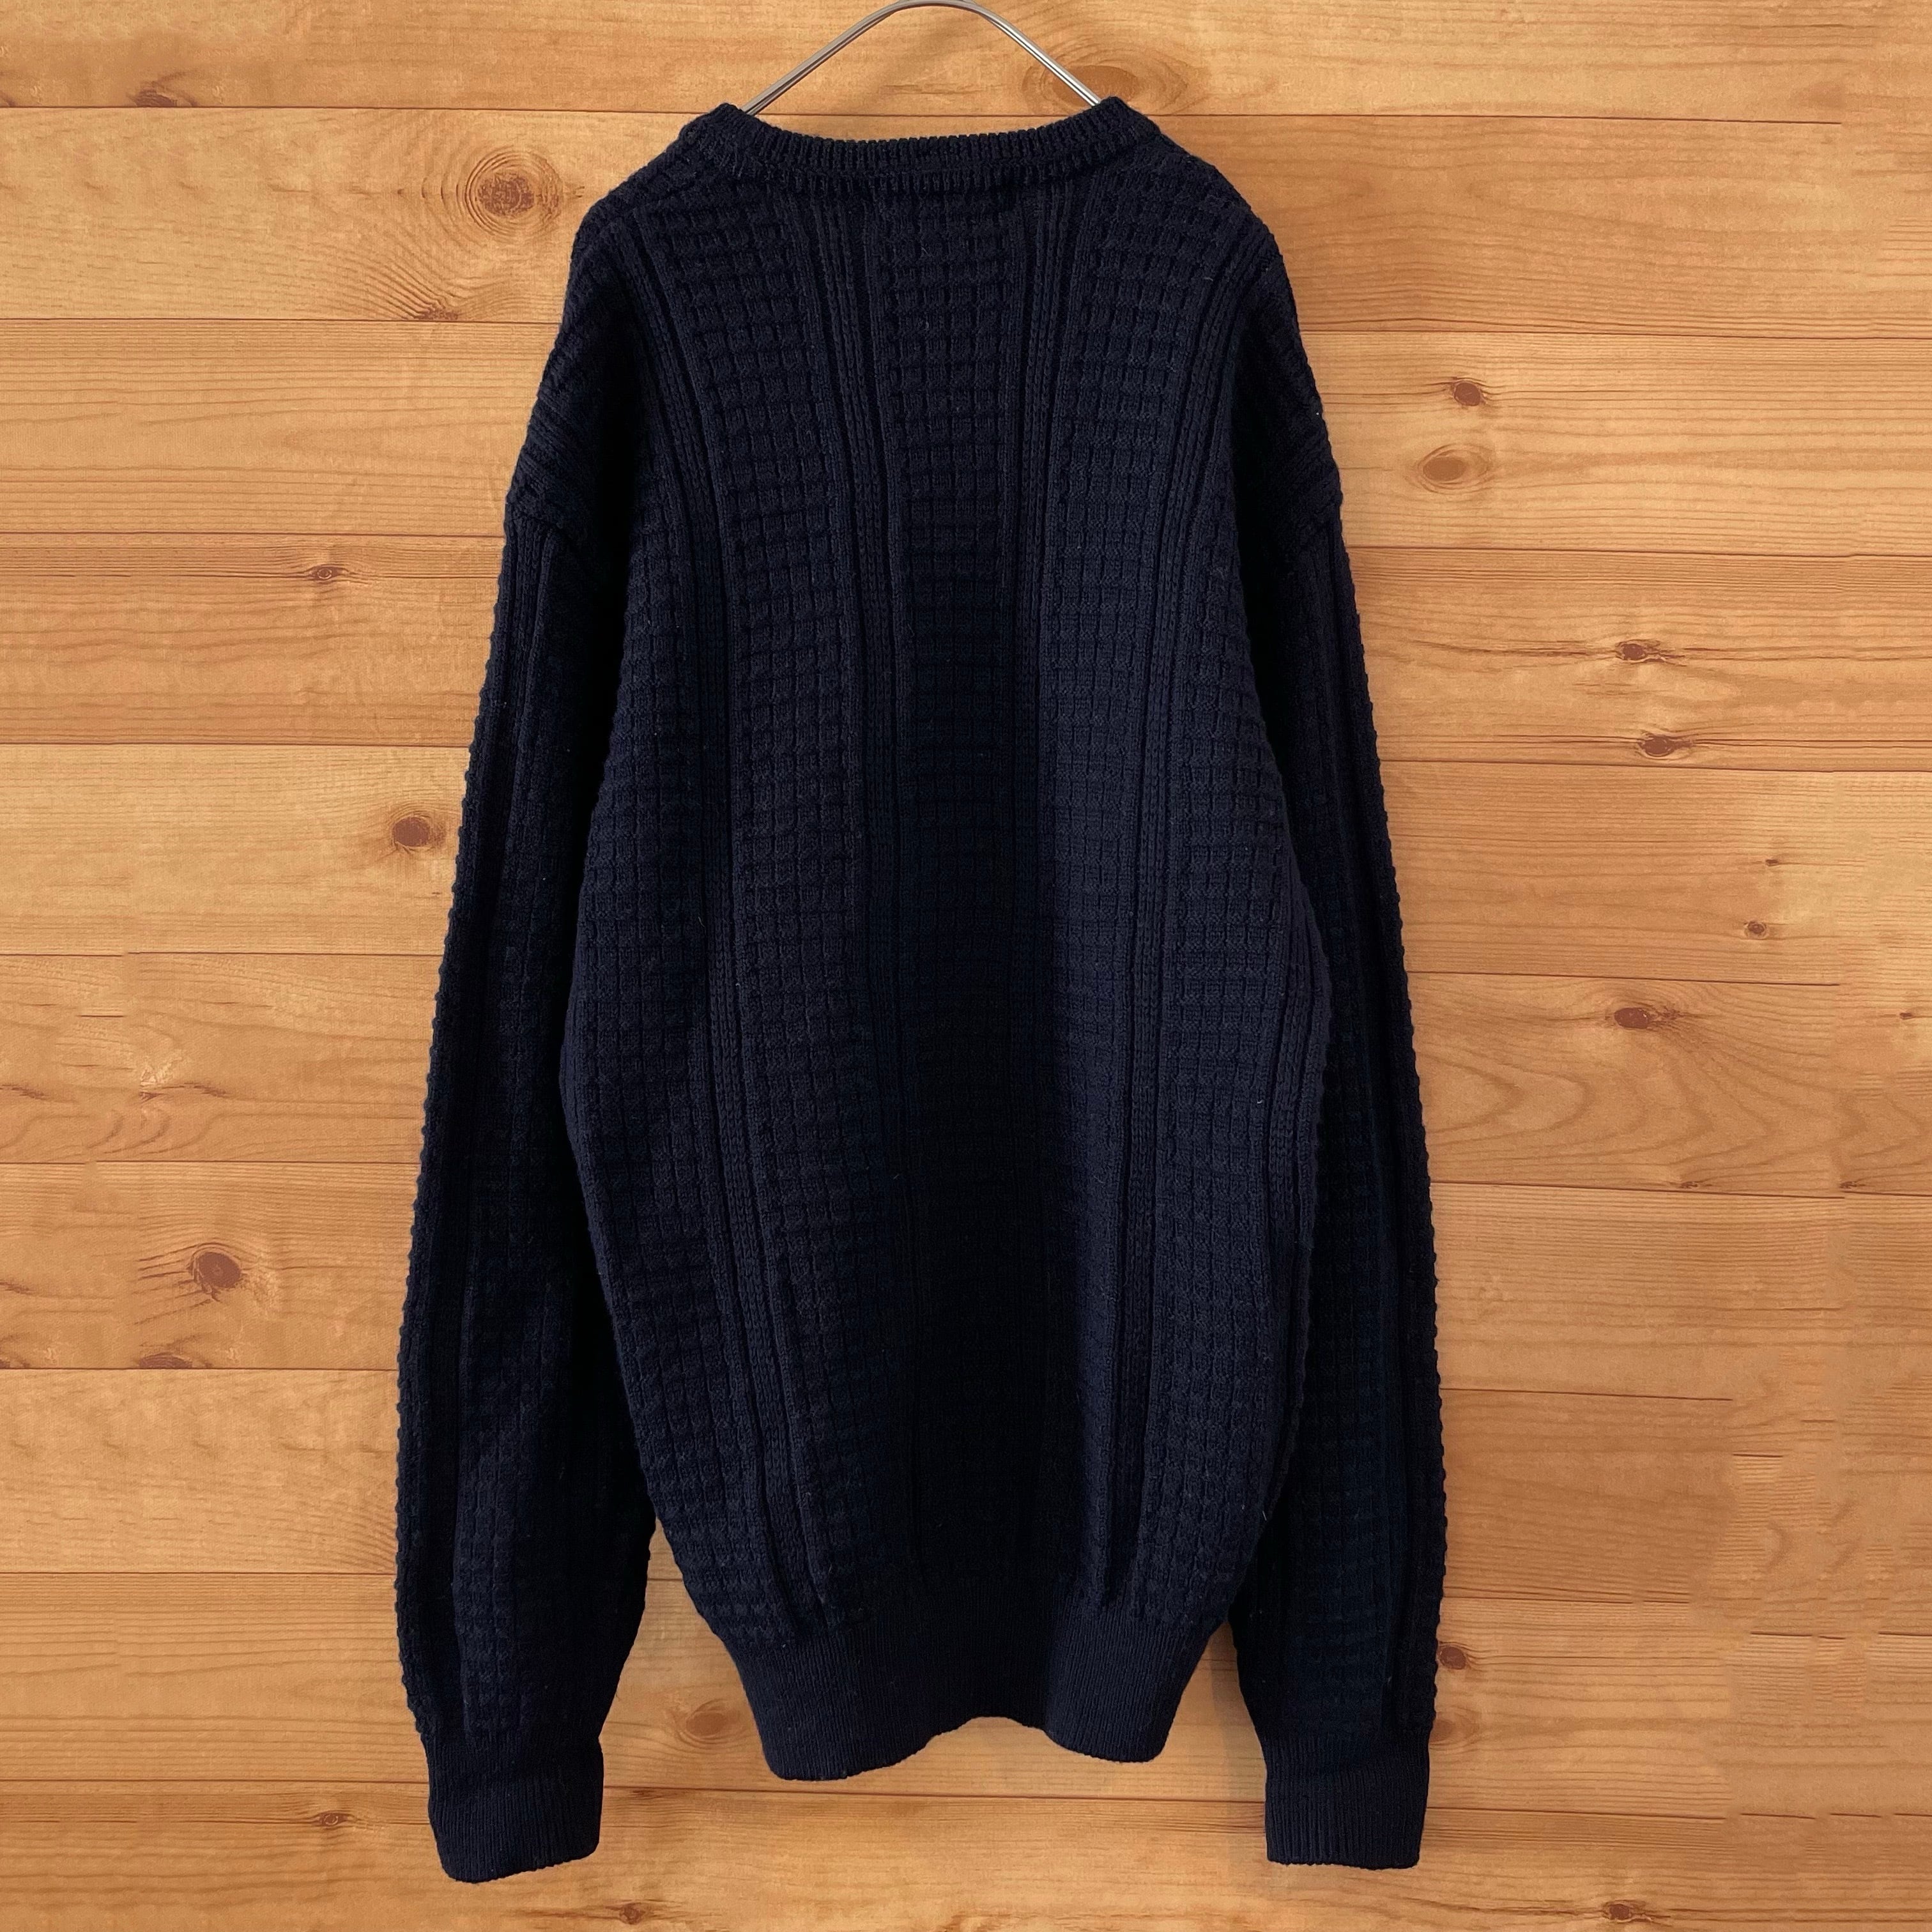 VIESTENI】日本製 デザイン ニット セーター 個性的 Mサイズ 古着